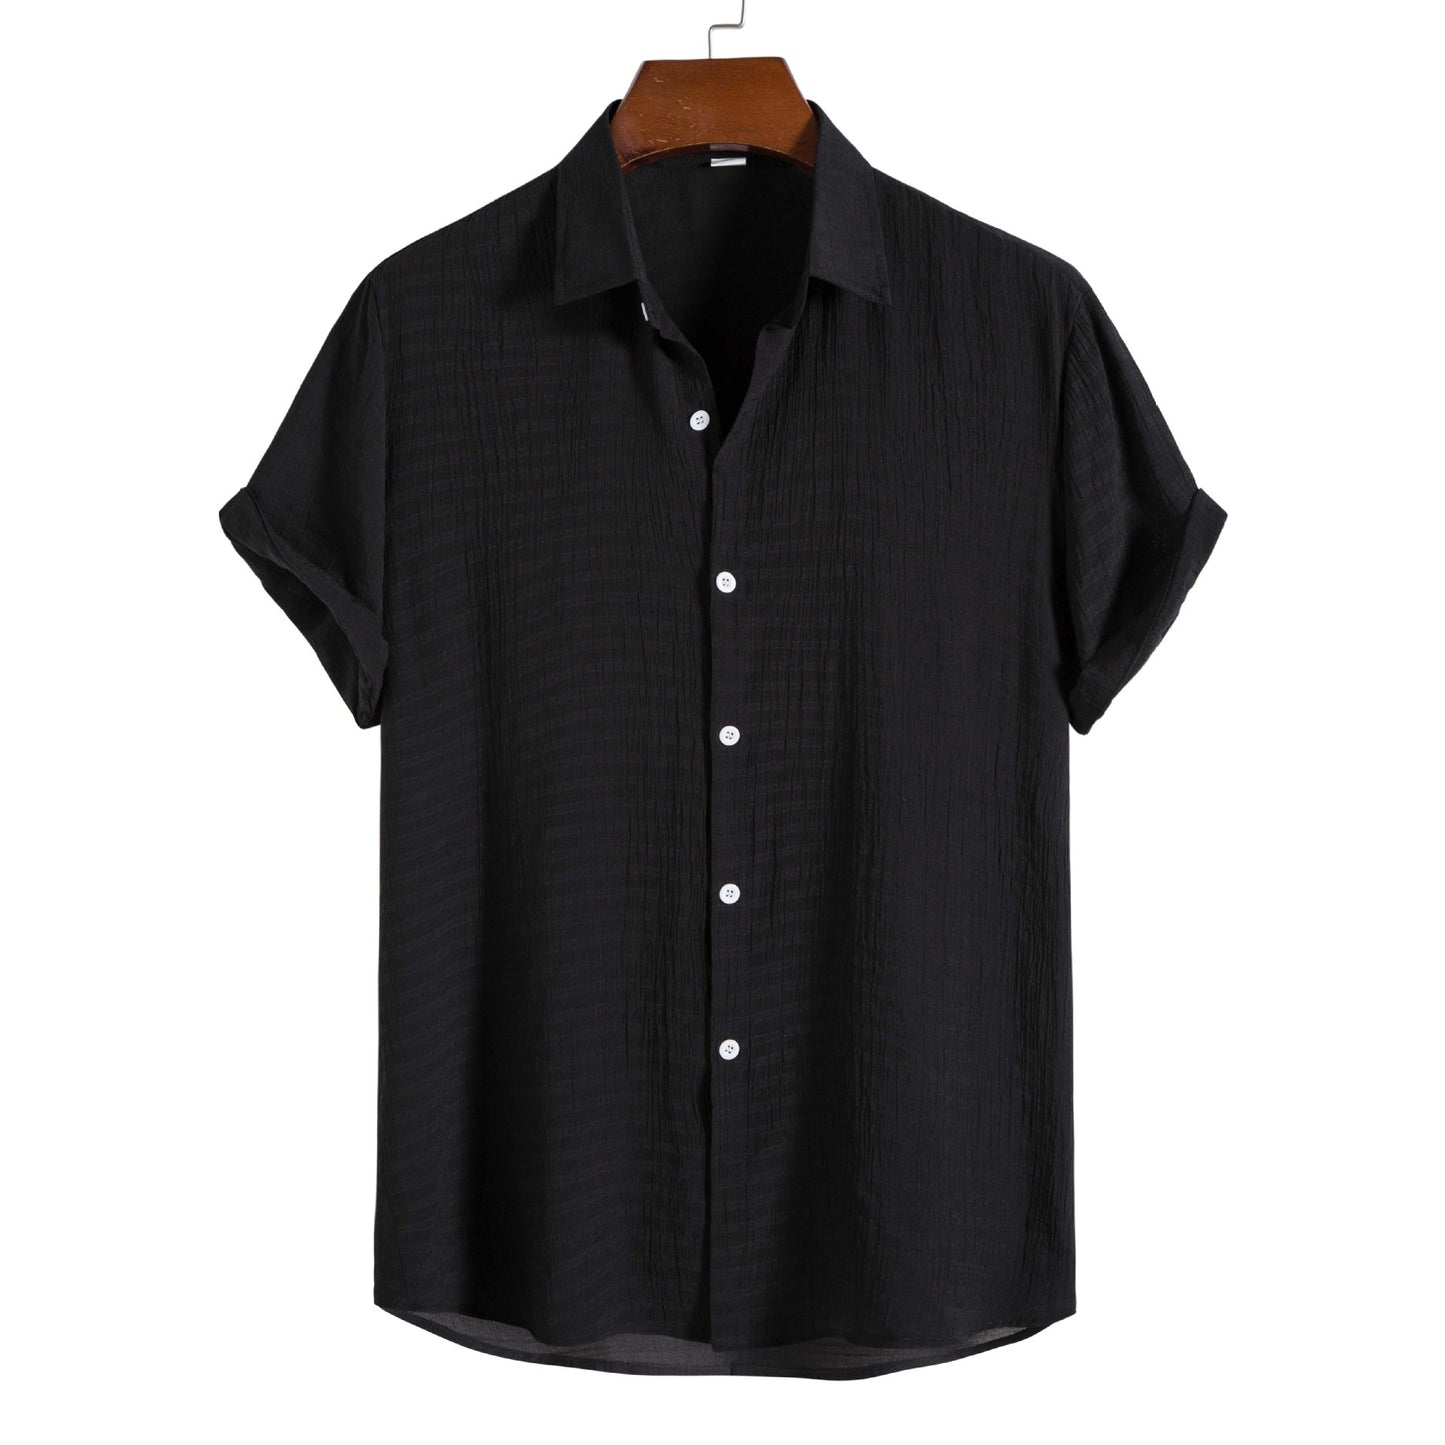 Men's Fashion Solid Color Dark Cell Short Sleeve Shirt